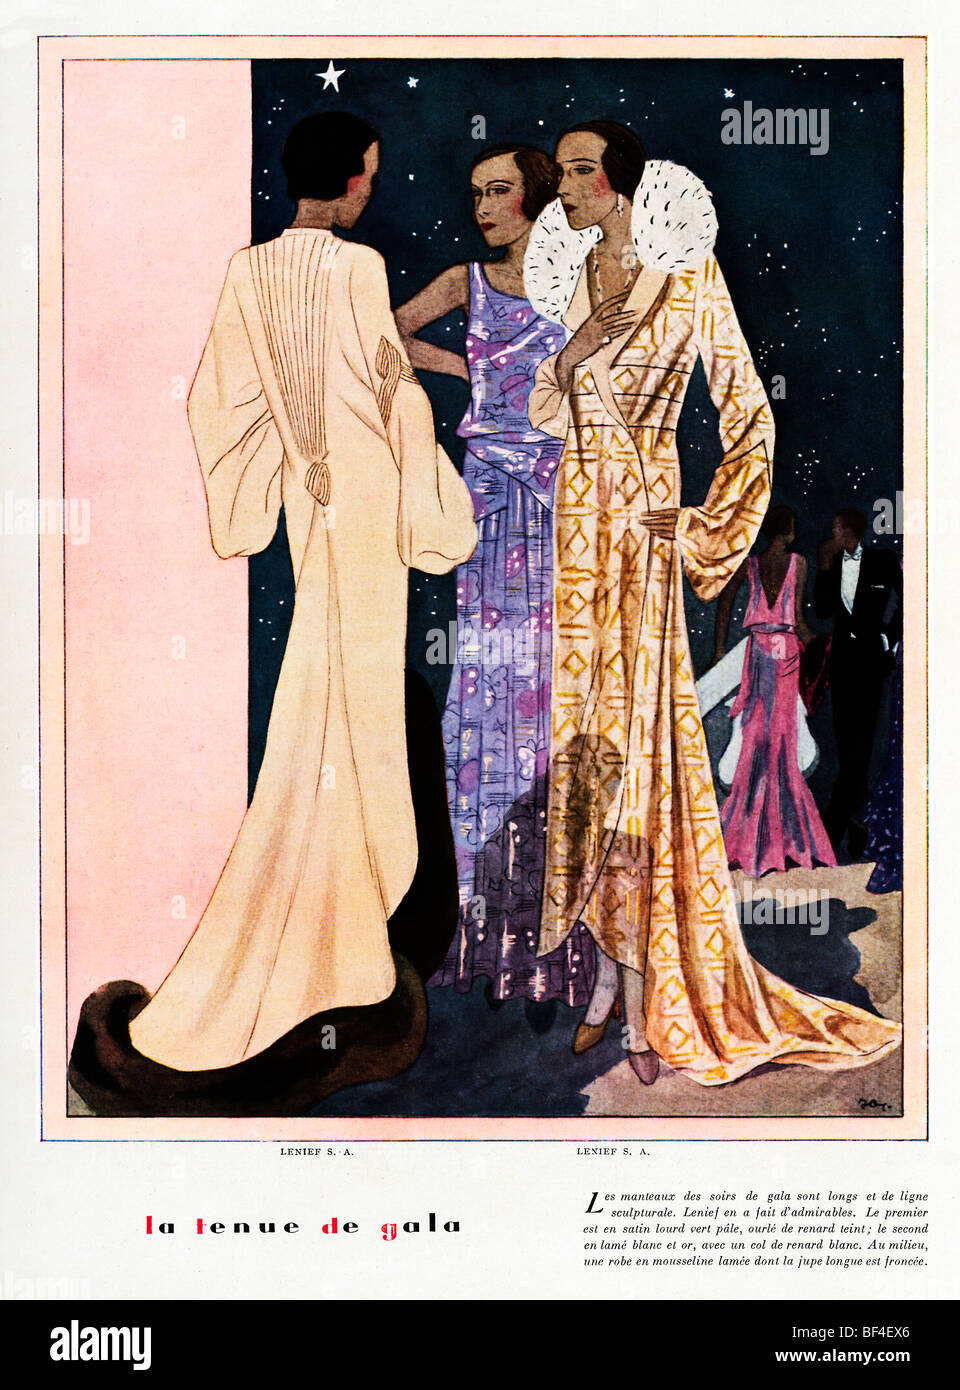 La Tenue De Gala, 1930s French fashion magazine illustration, long elegant  evening gowns by Lenief Stock Photo - Alamy